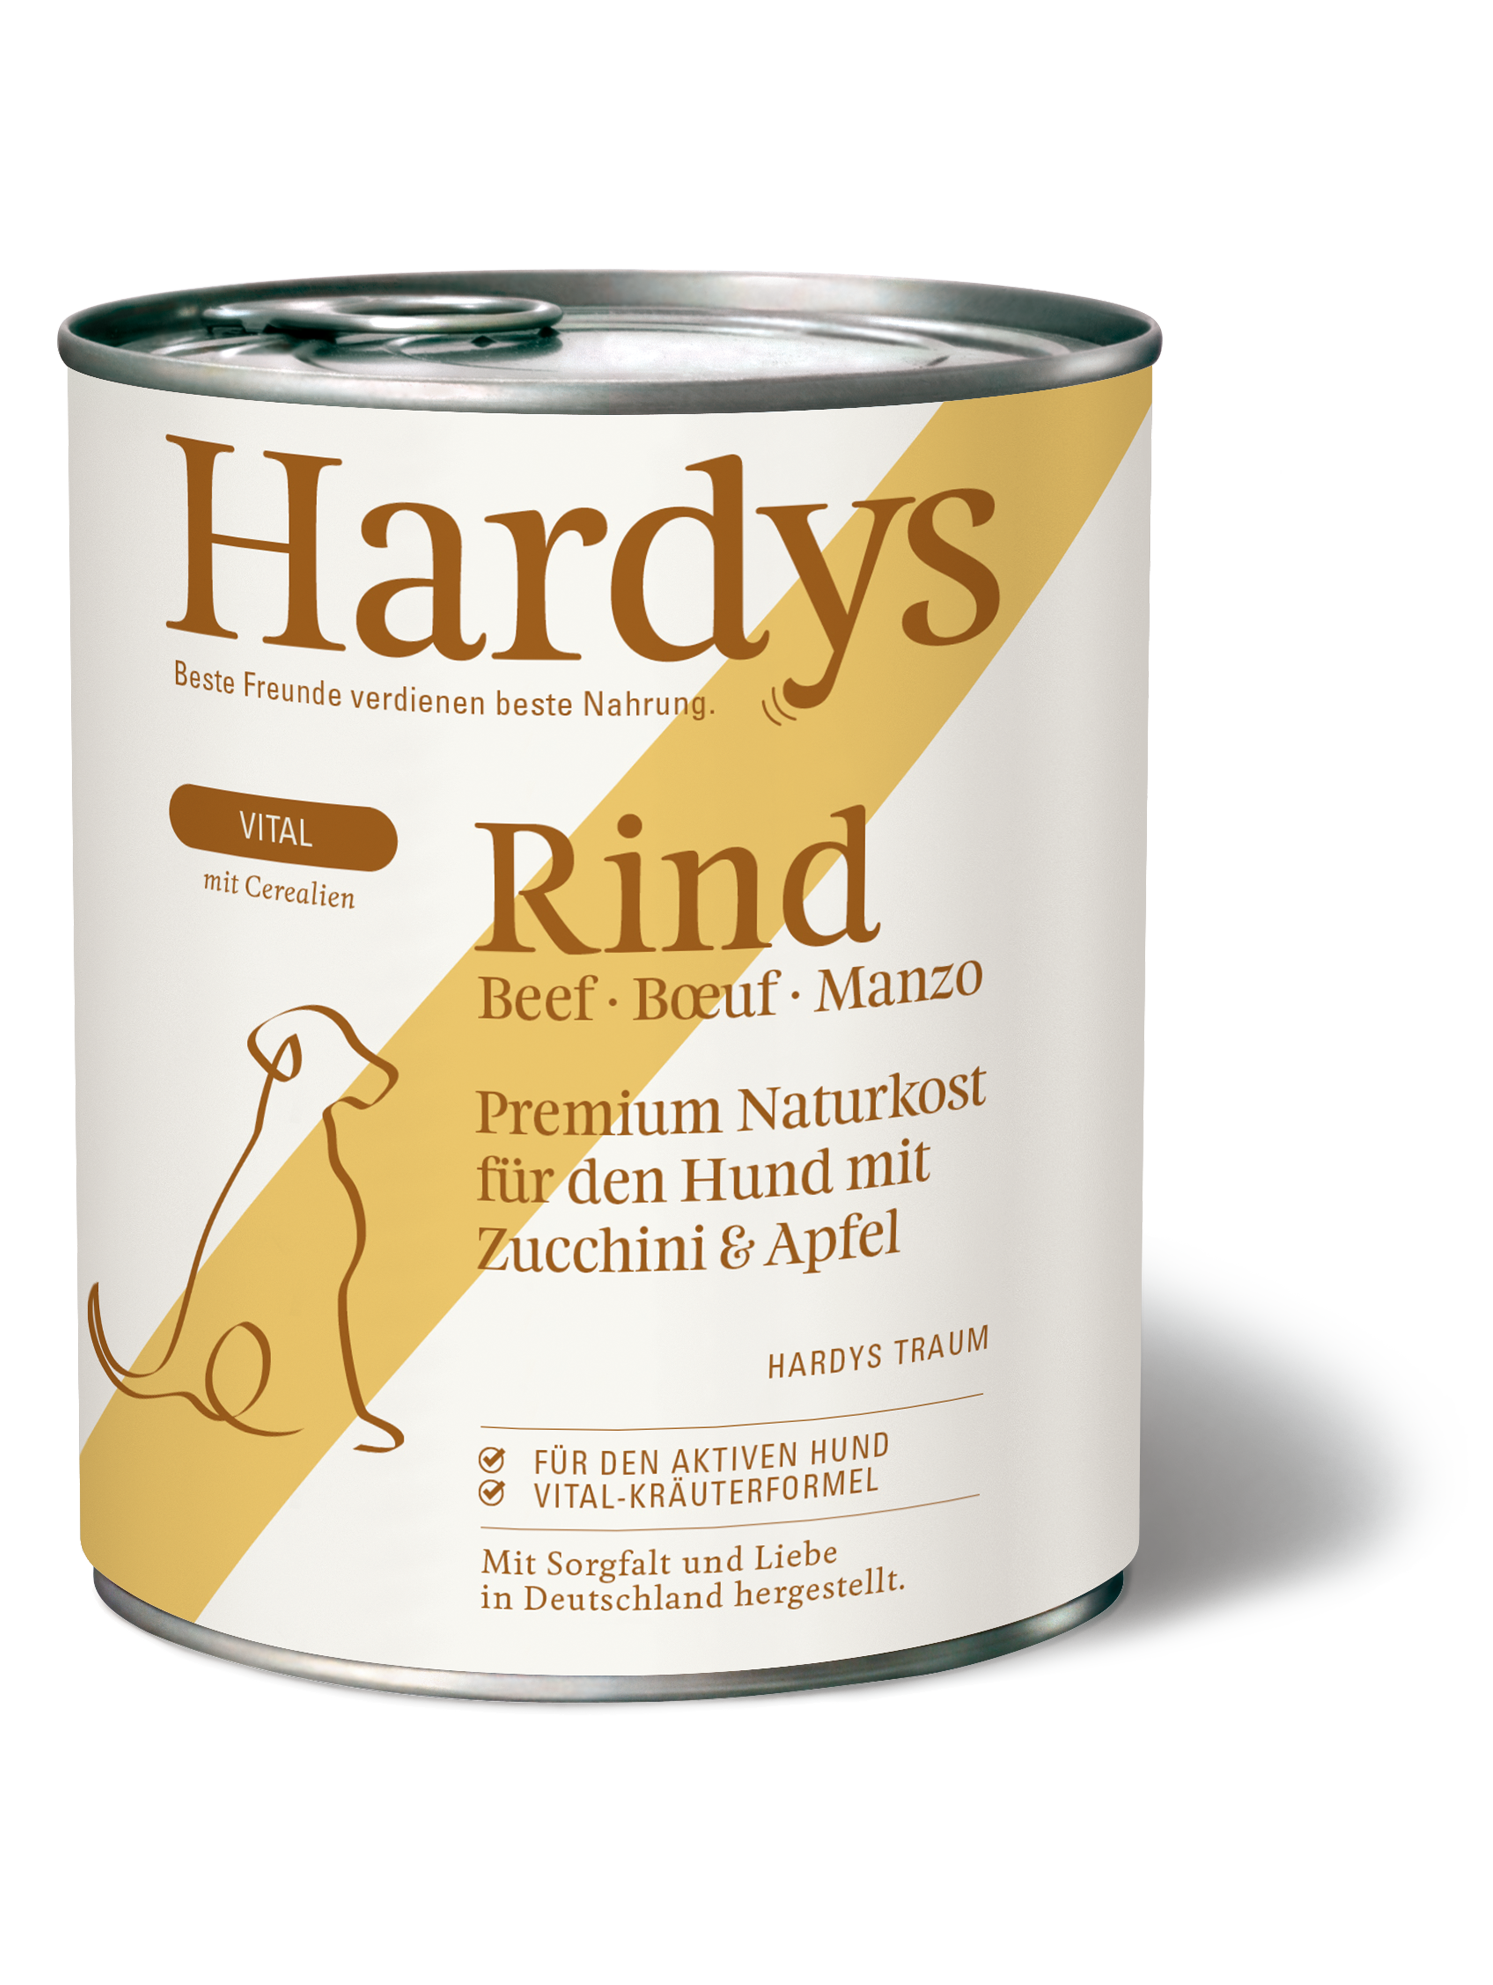 Hardys Vital Rind mit Zucchini & Apfel, 800 g